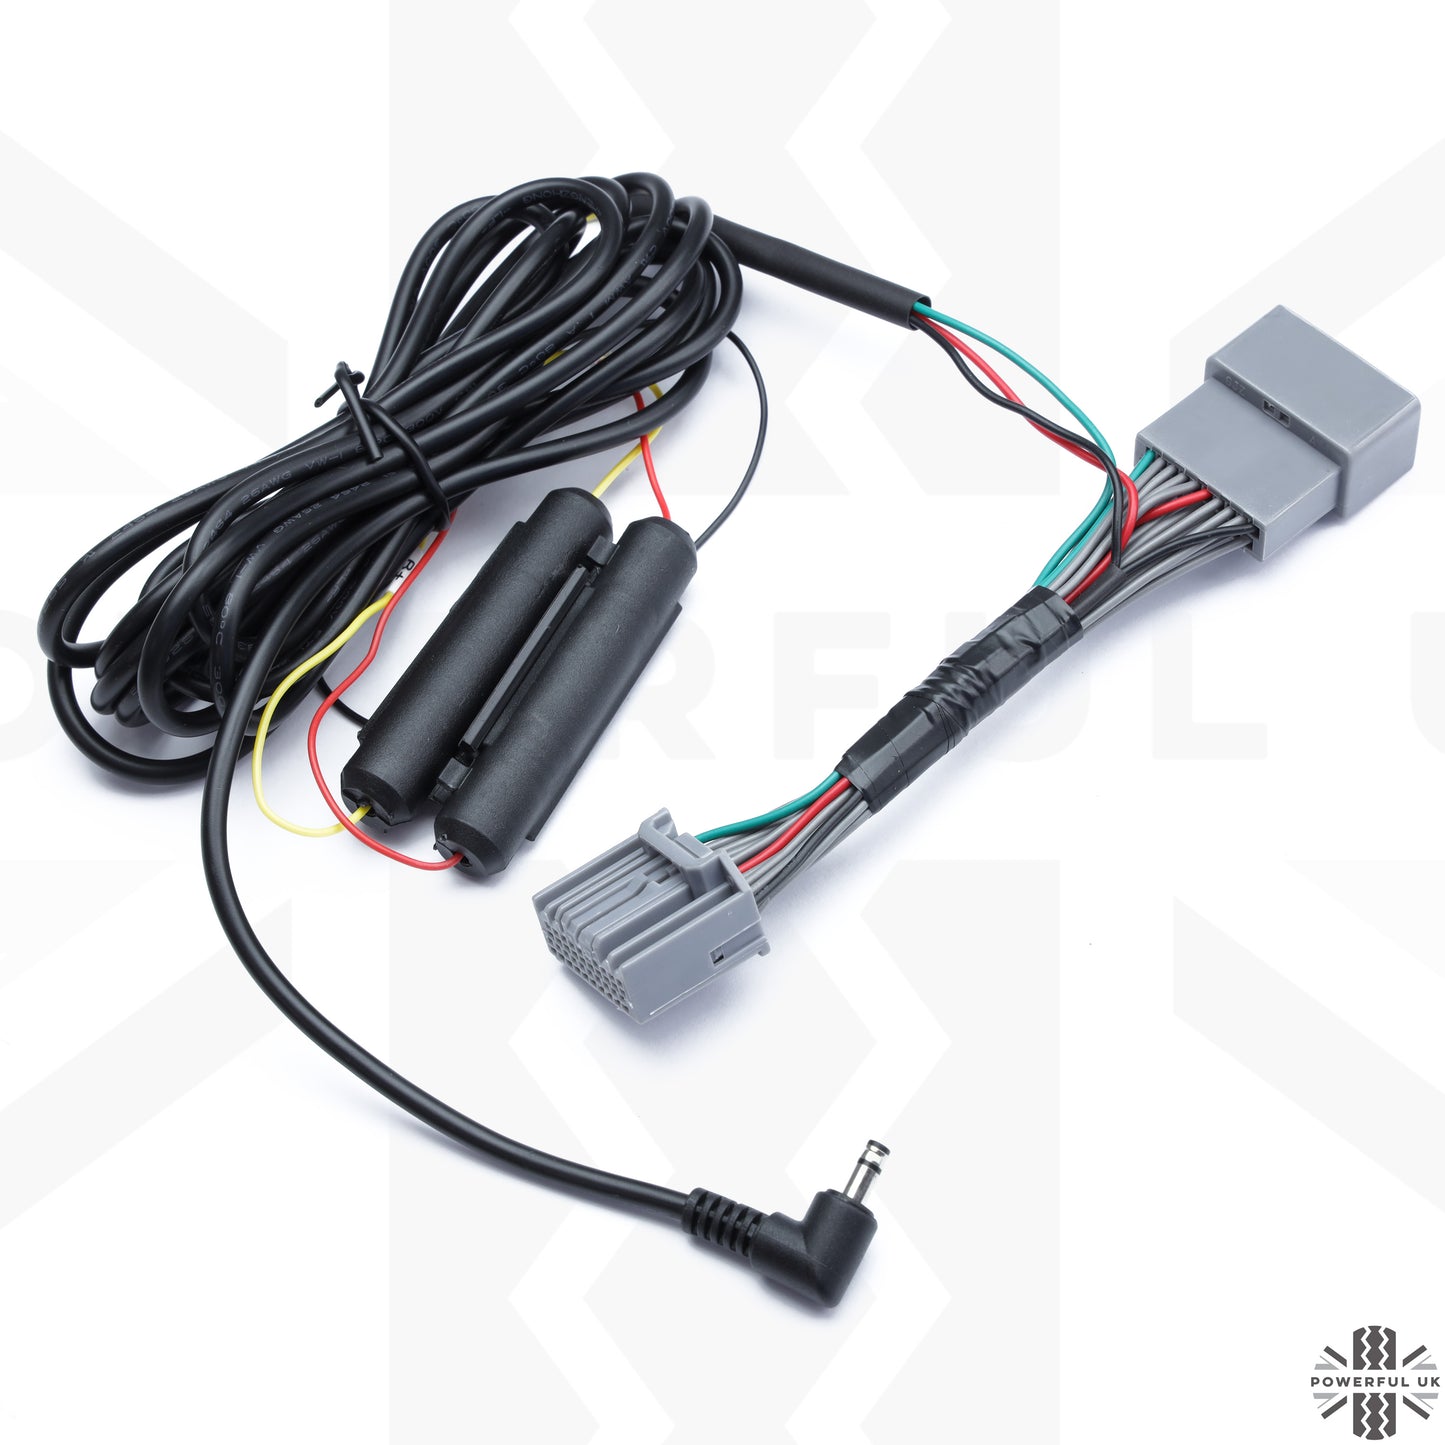 Hardwire Kit for Blackvue Dashcam for Range Rover L460